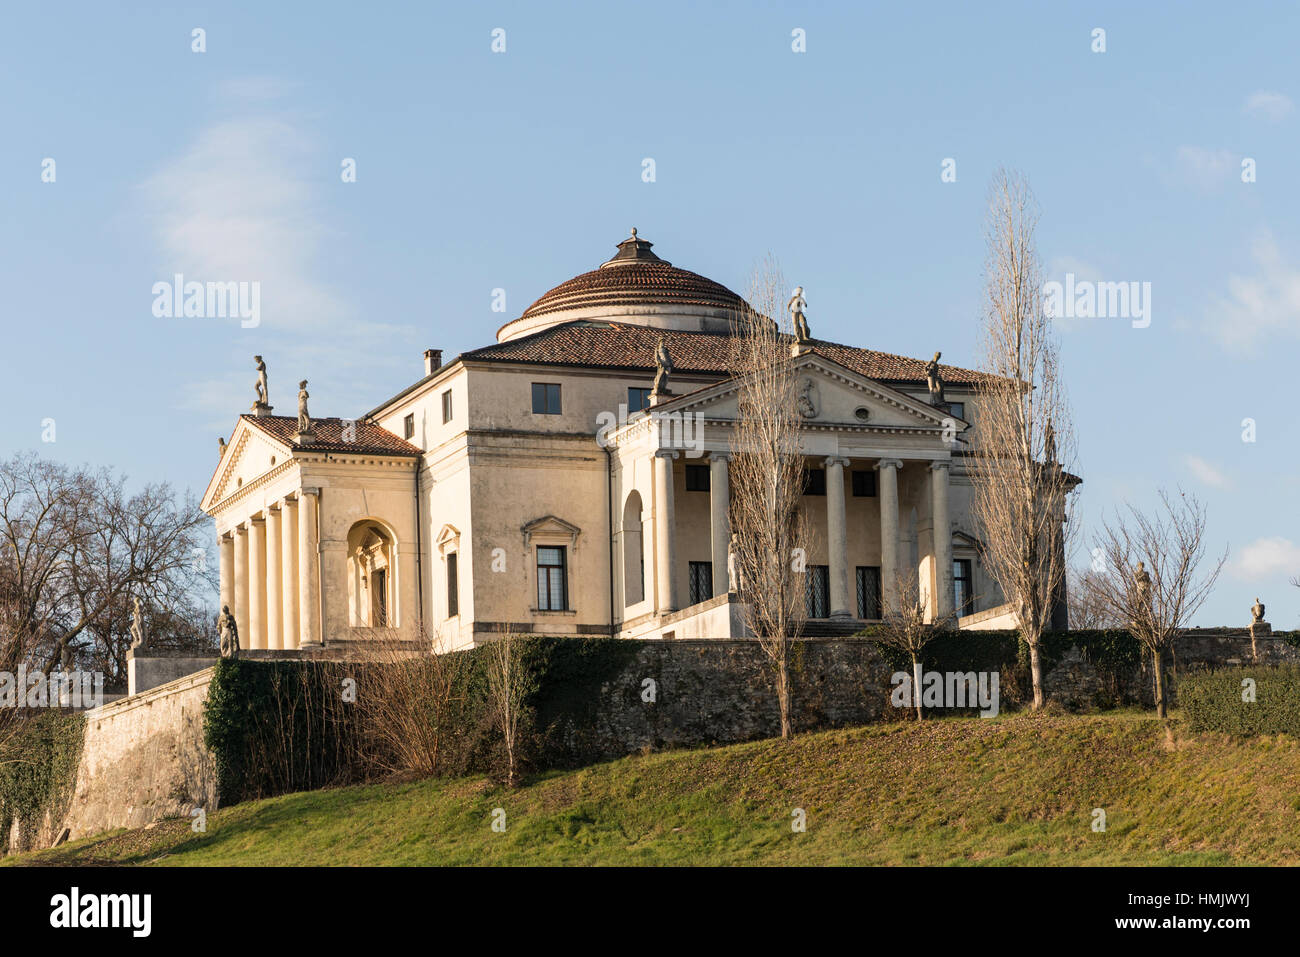 Palladio's Villa Rotonda, Vicenza Stock Photo